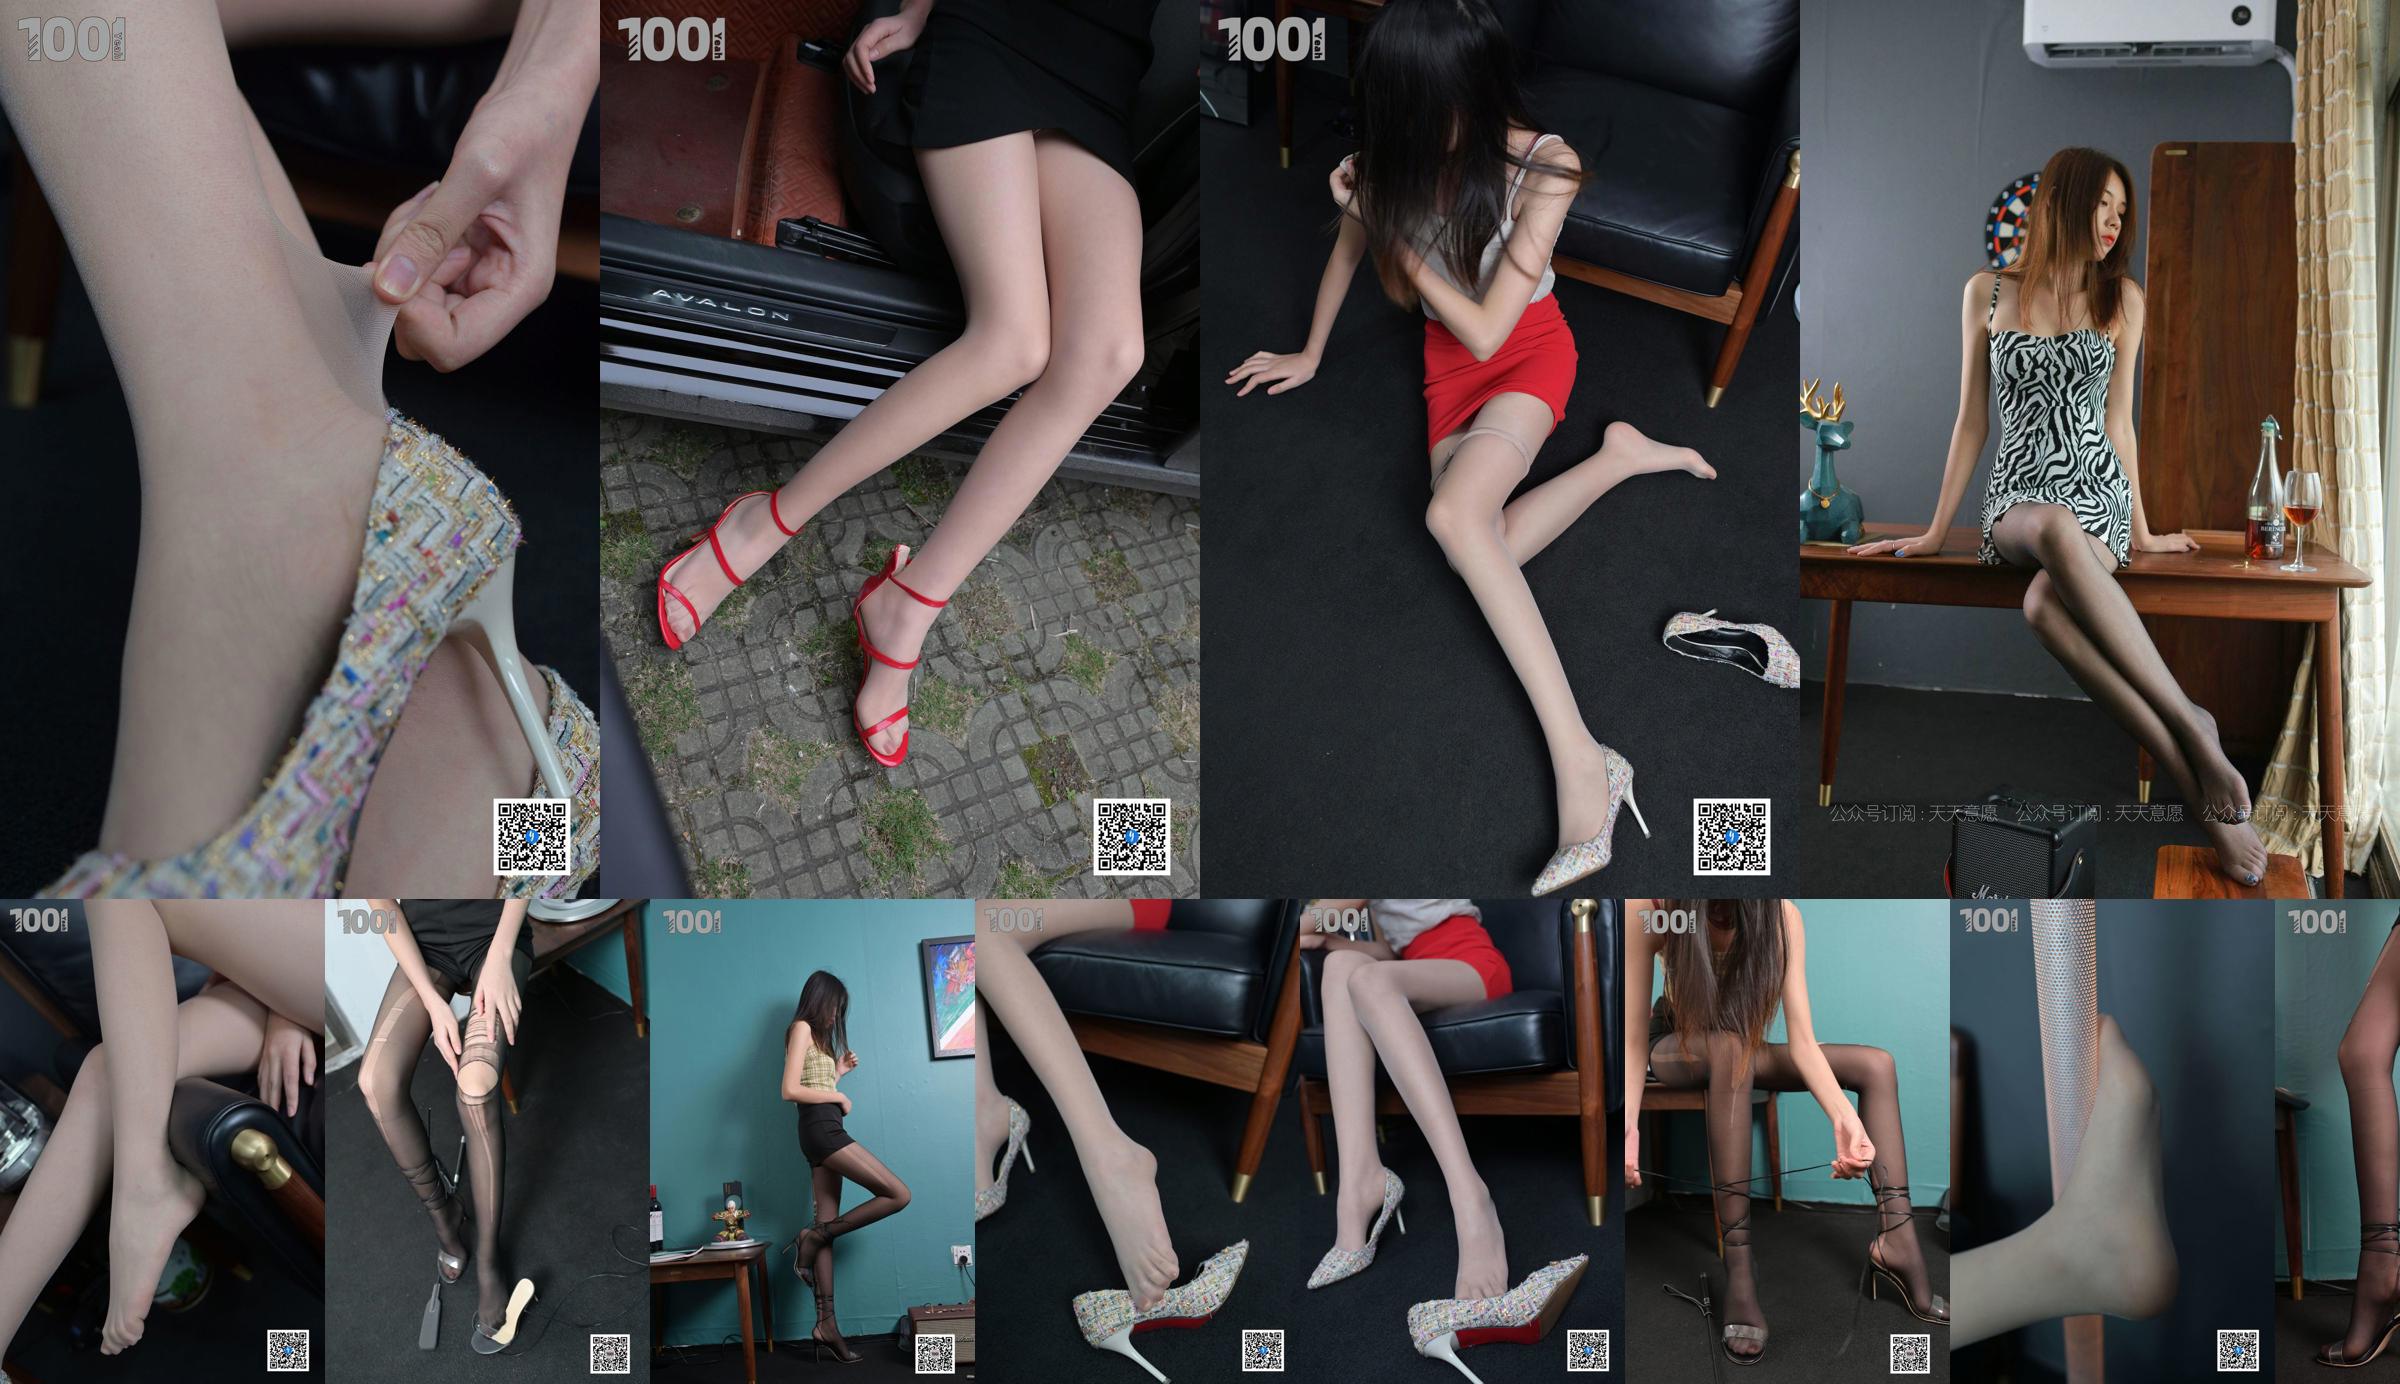 [丽 柜 LiGui] Modelo Wei Wei "Pie de seda secreto pequeño de tacón alto de seda gris" Foto de hermosas piernas y pies de jade No.8232db Página 1